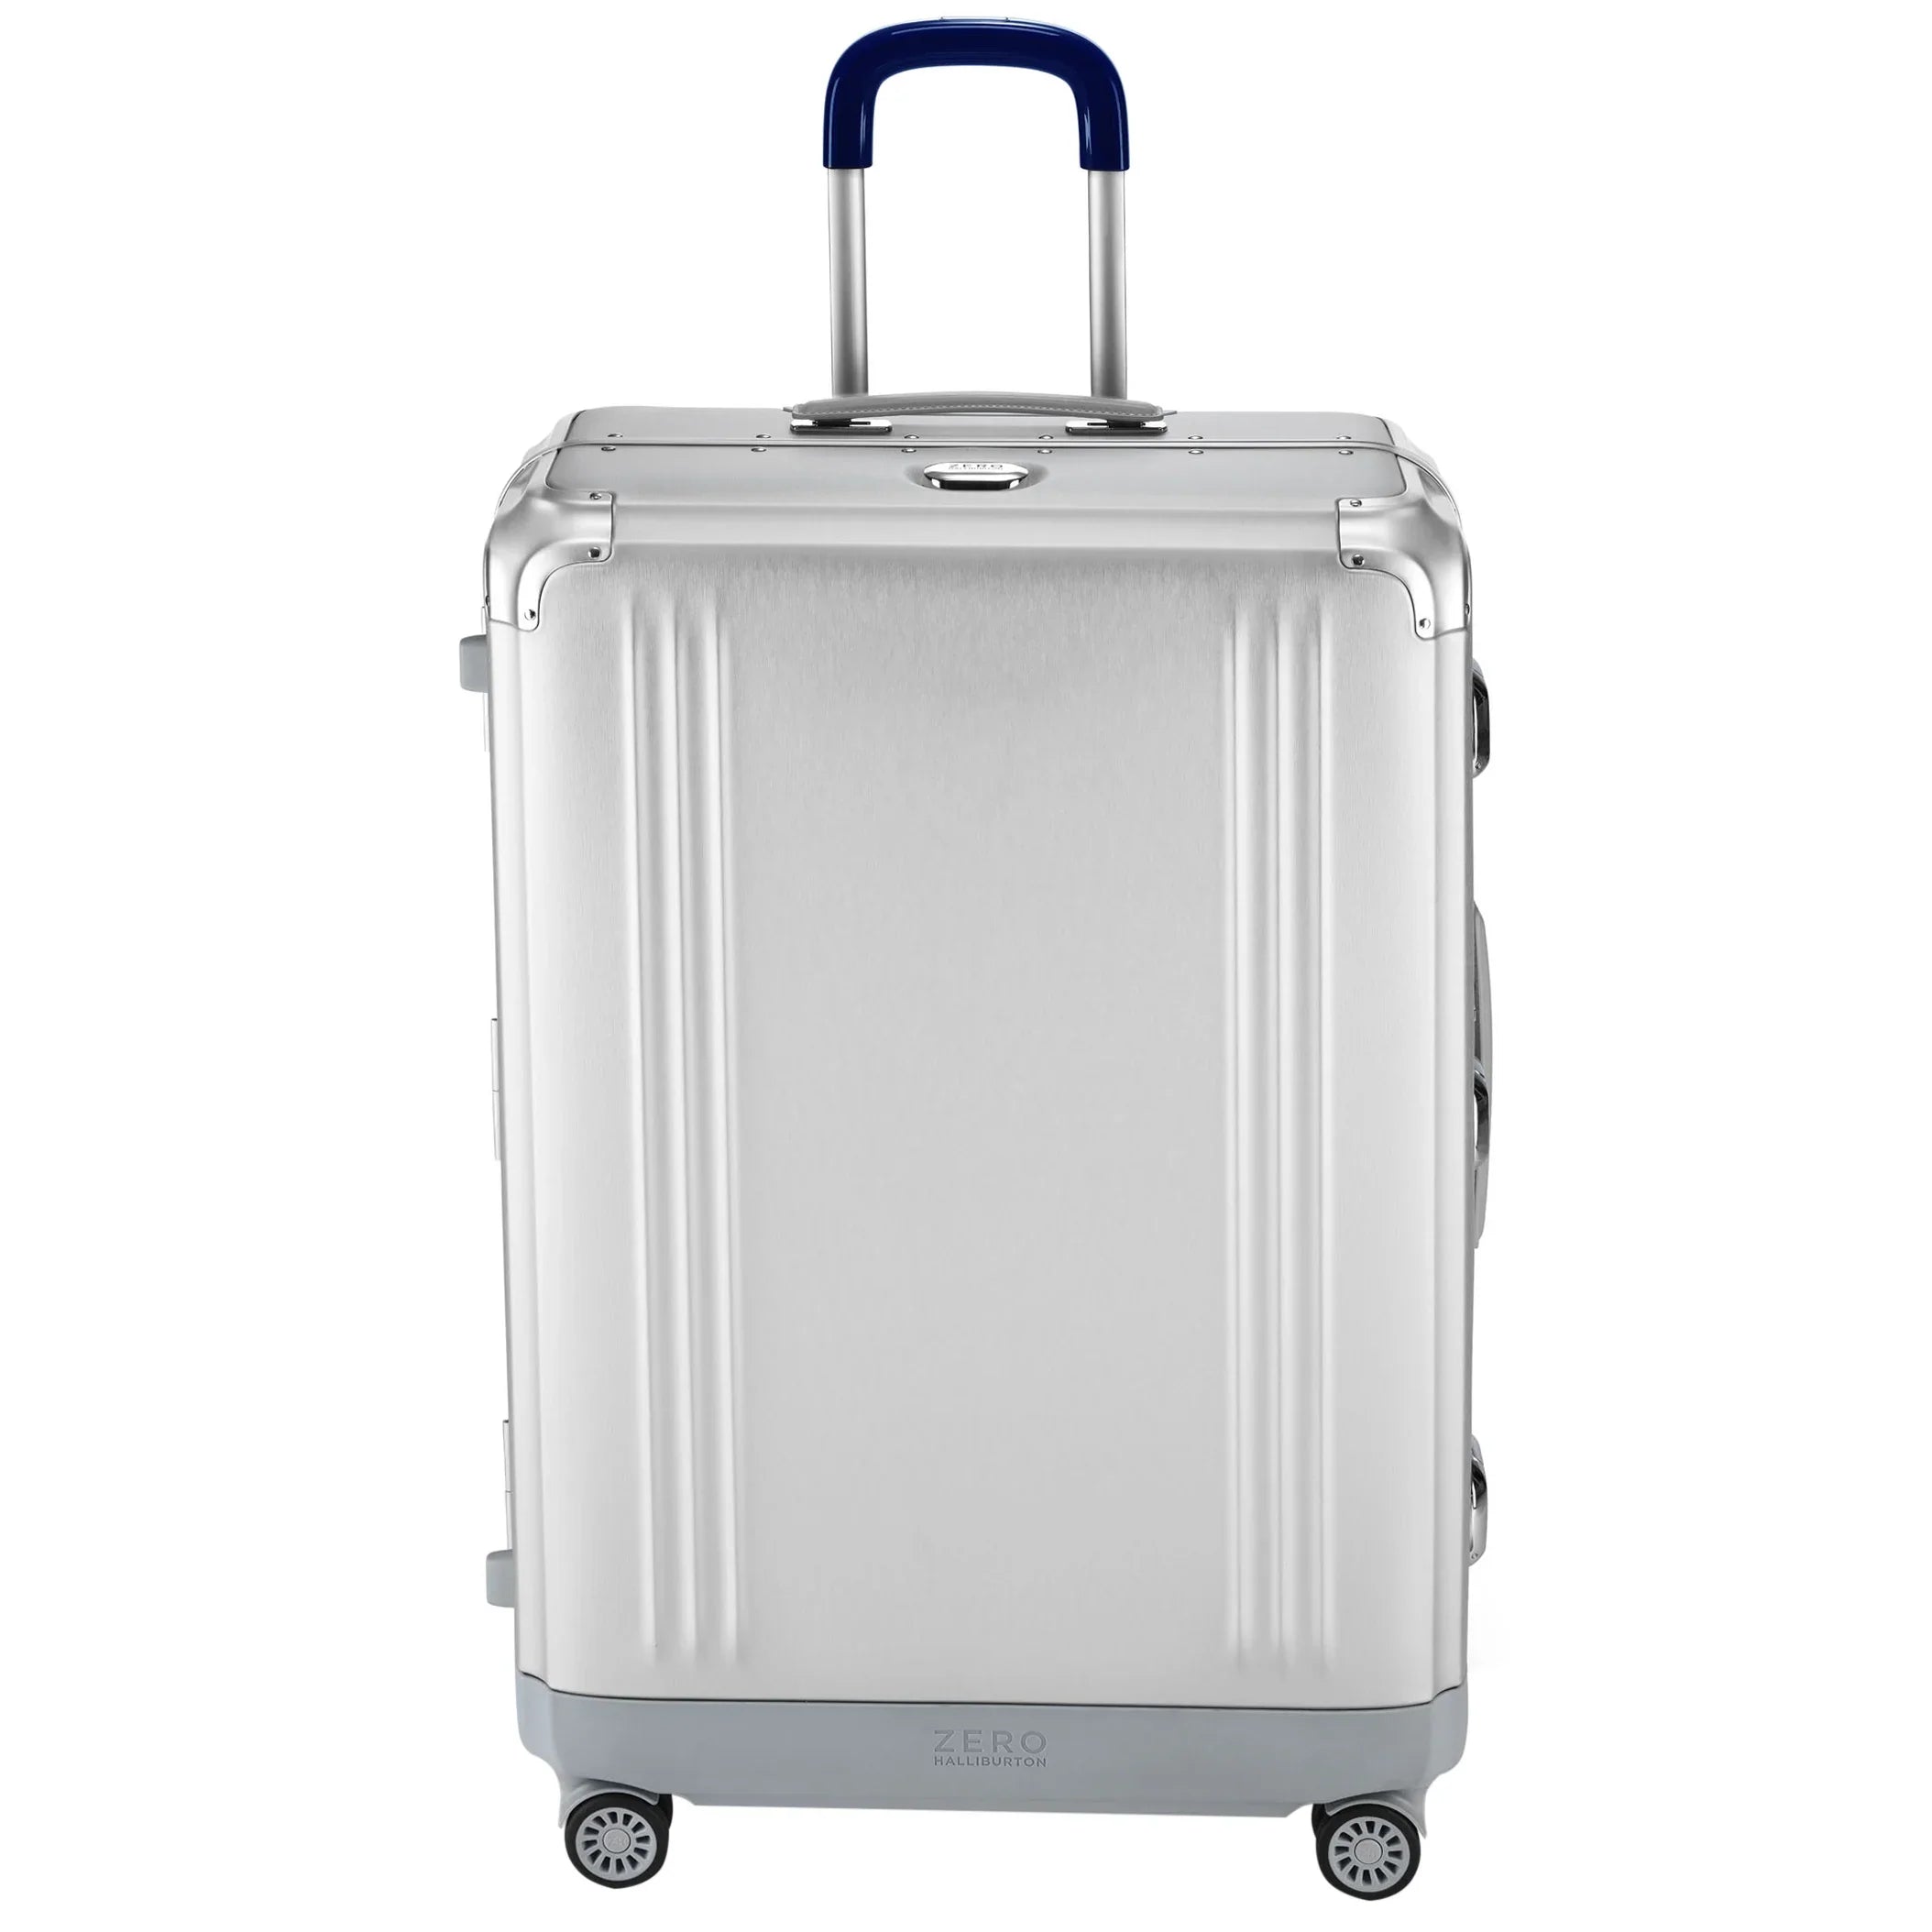 Zero Halliburton Pursuit Check In Luggage 4-Rollen Trolley 77 cm - Silver